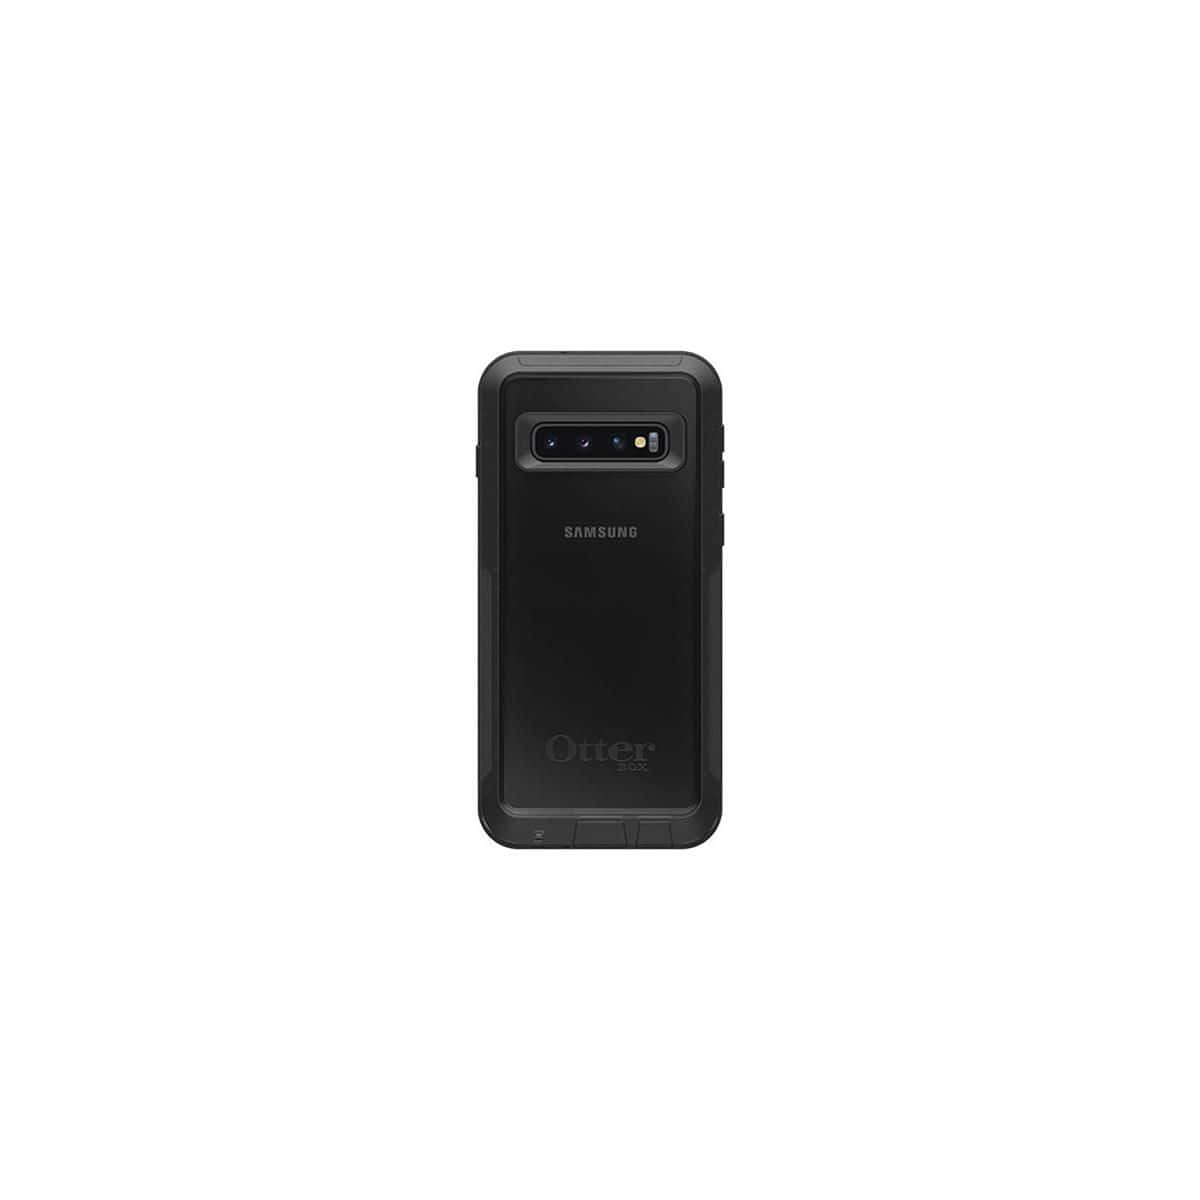 Introduktionaf Samsung Galaxy S10